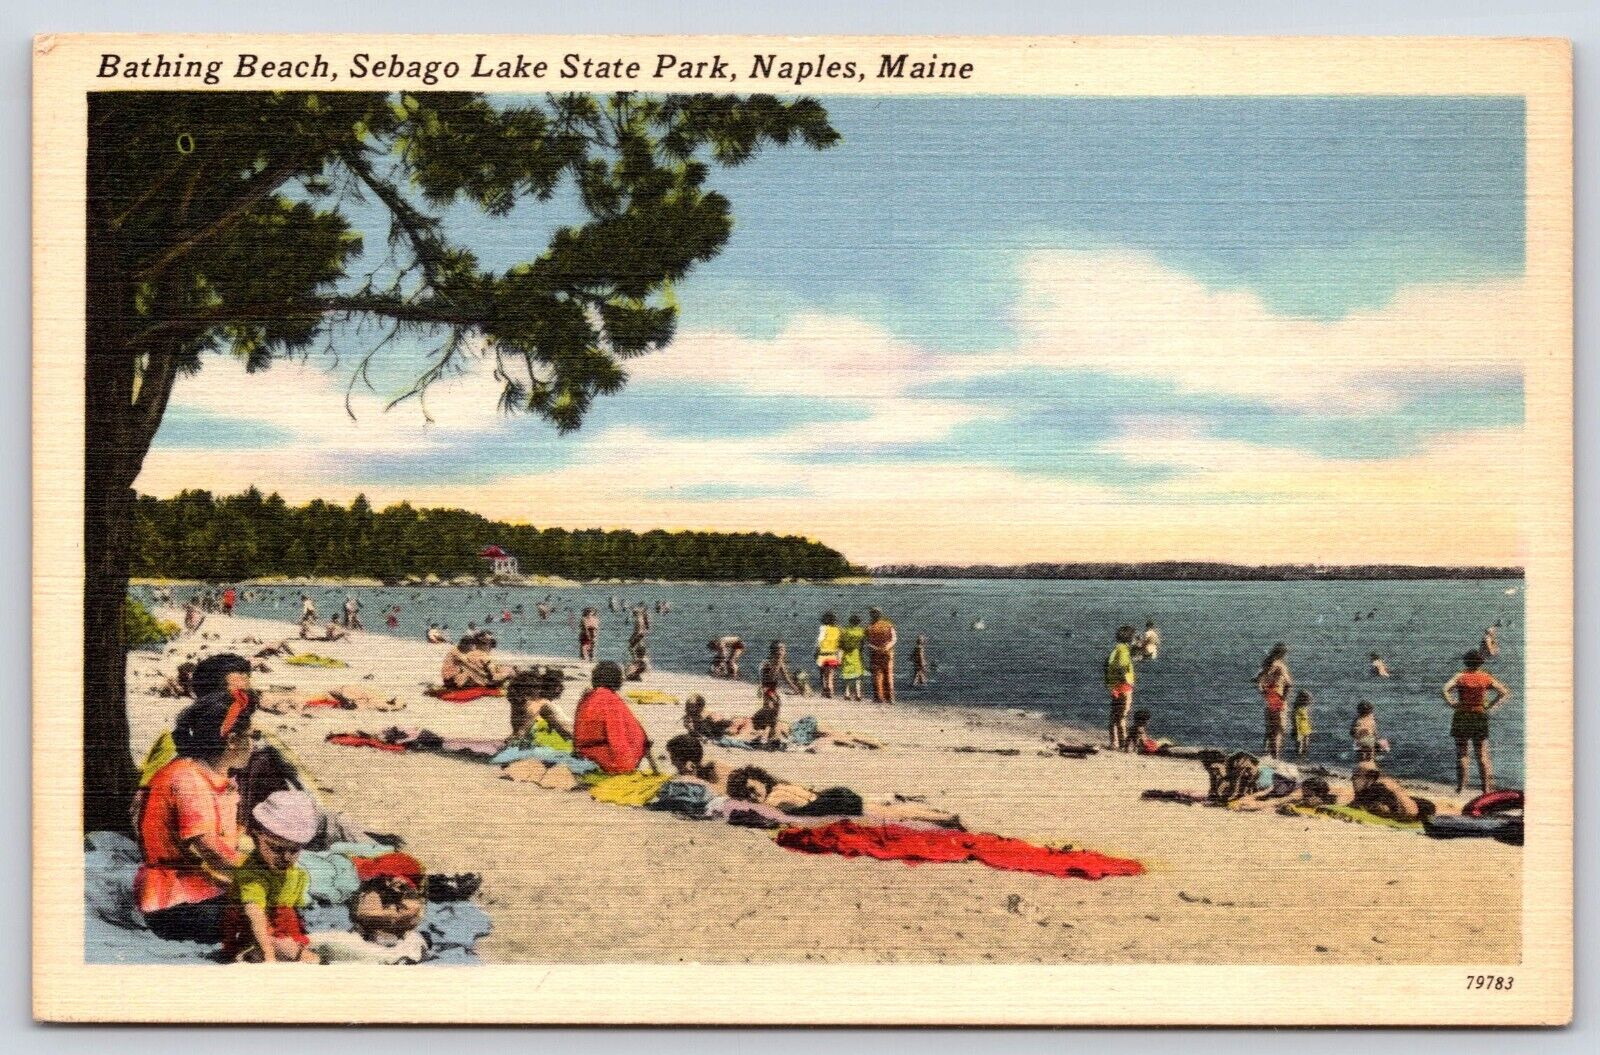 Maine Naples Bathing Beach Sebago Lake State Park Vintage Postcard